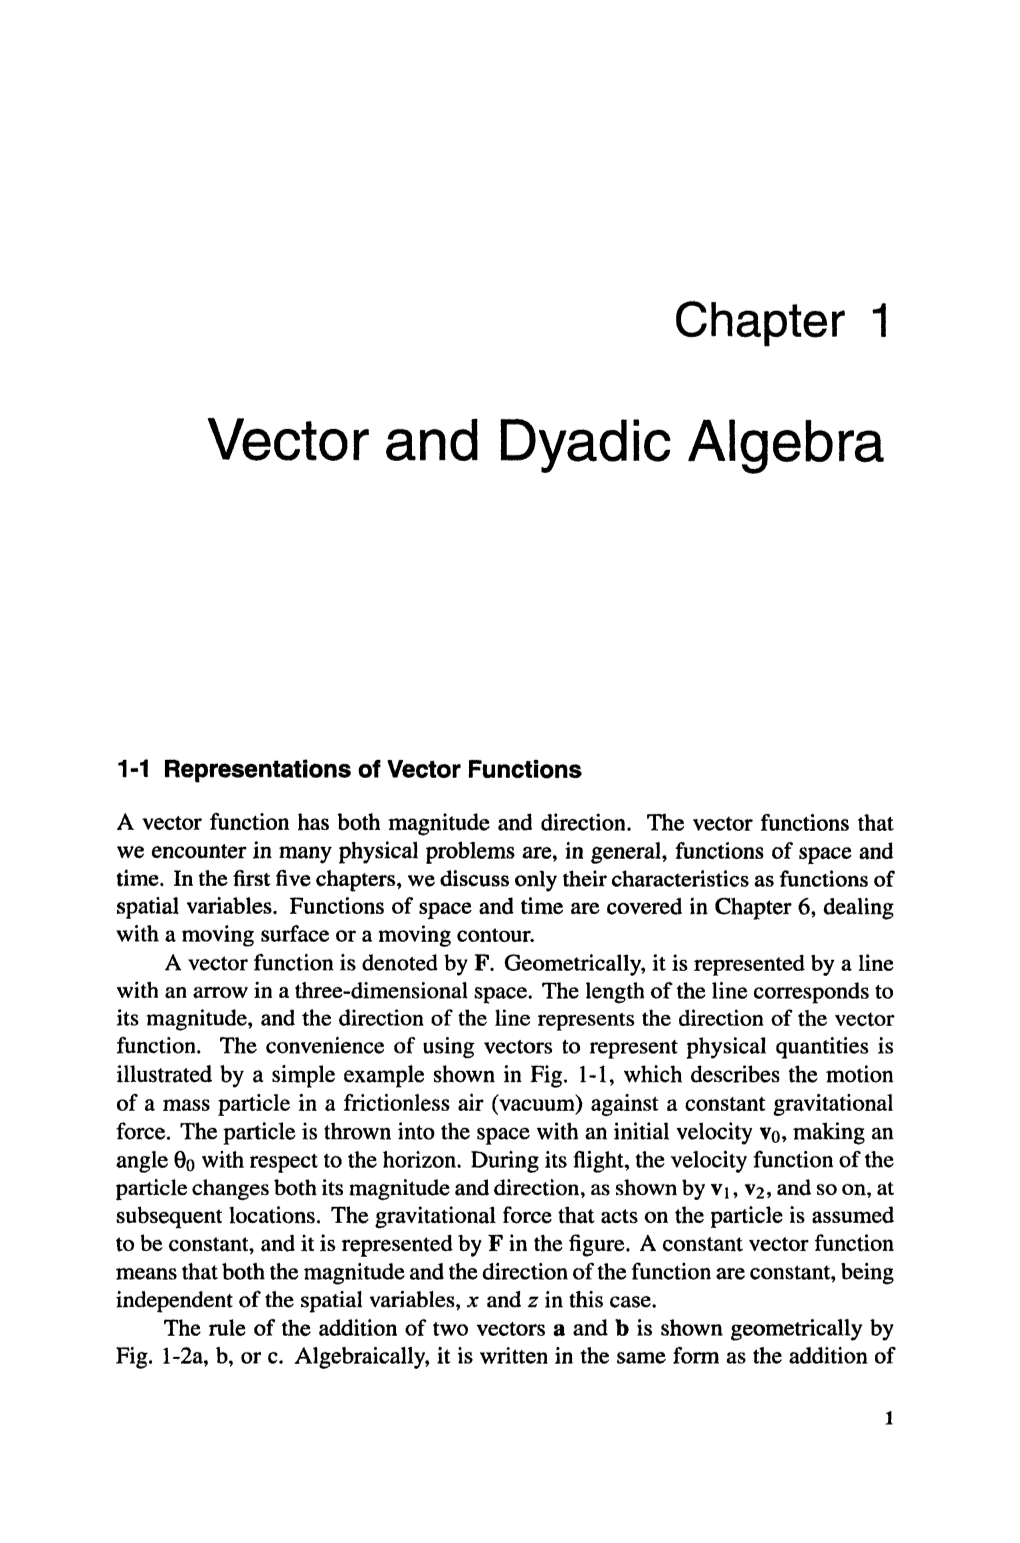 Vector and Dyadic Algebra